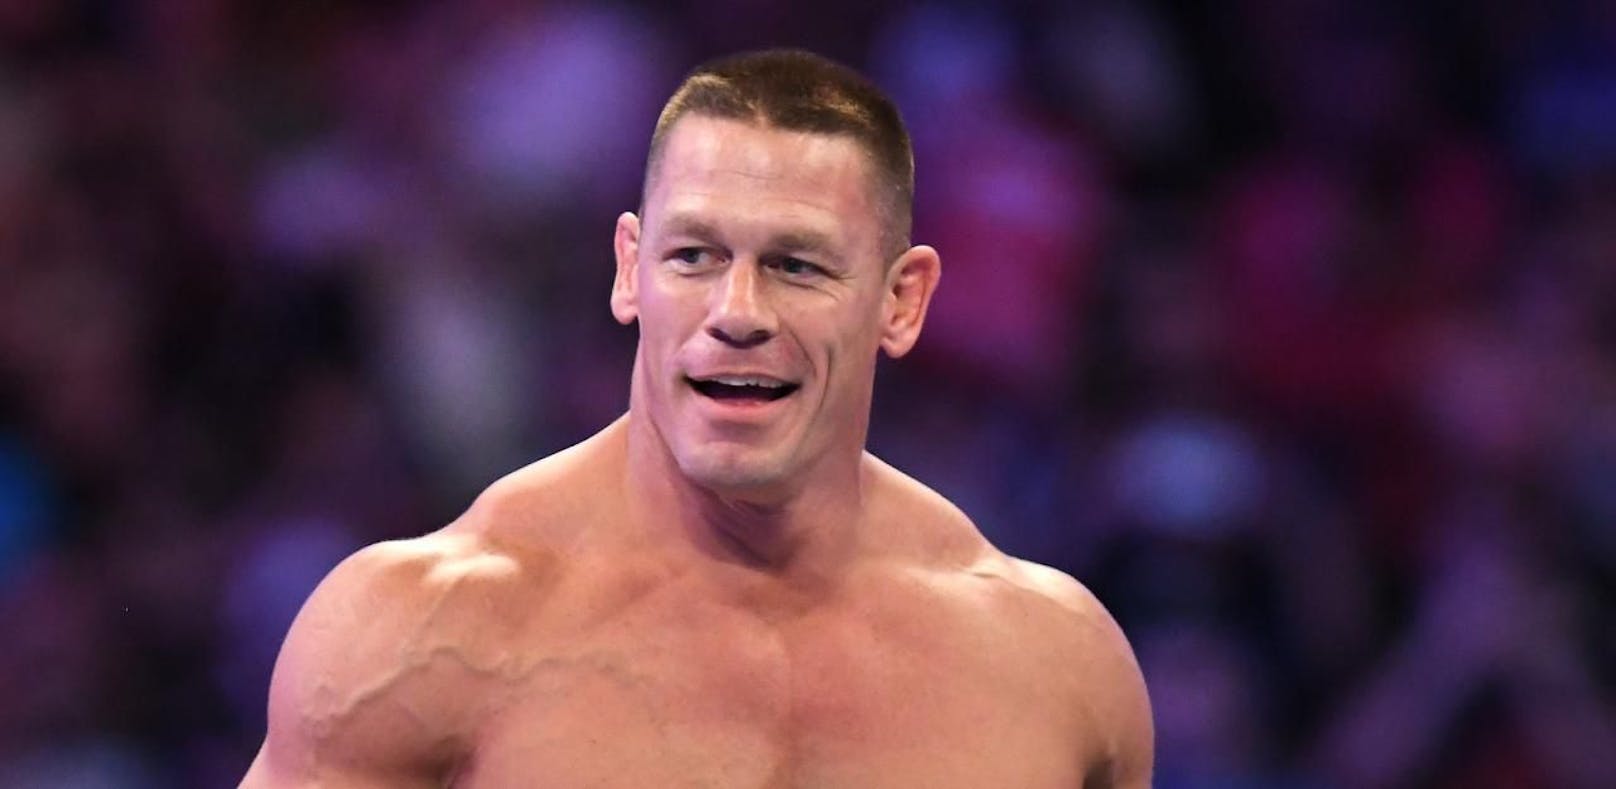 John Cena ist gerne rundum rasiert